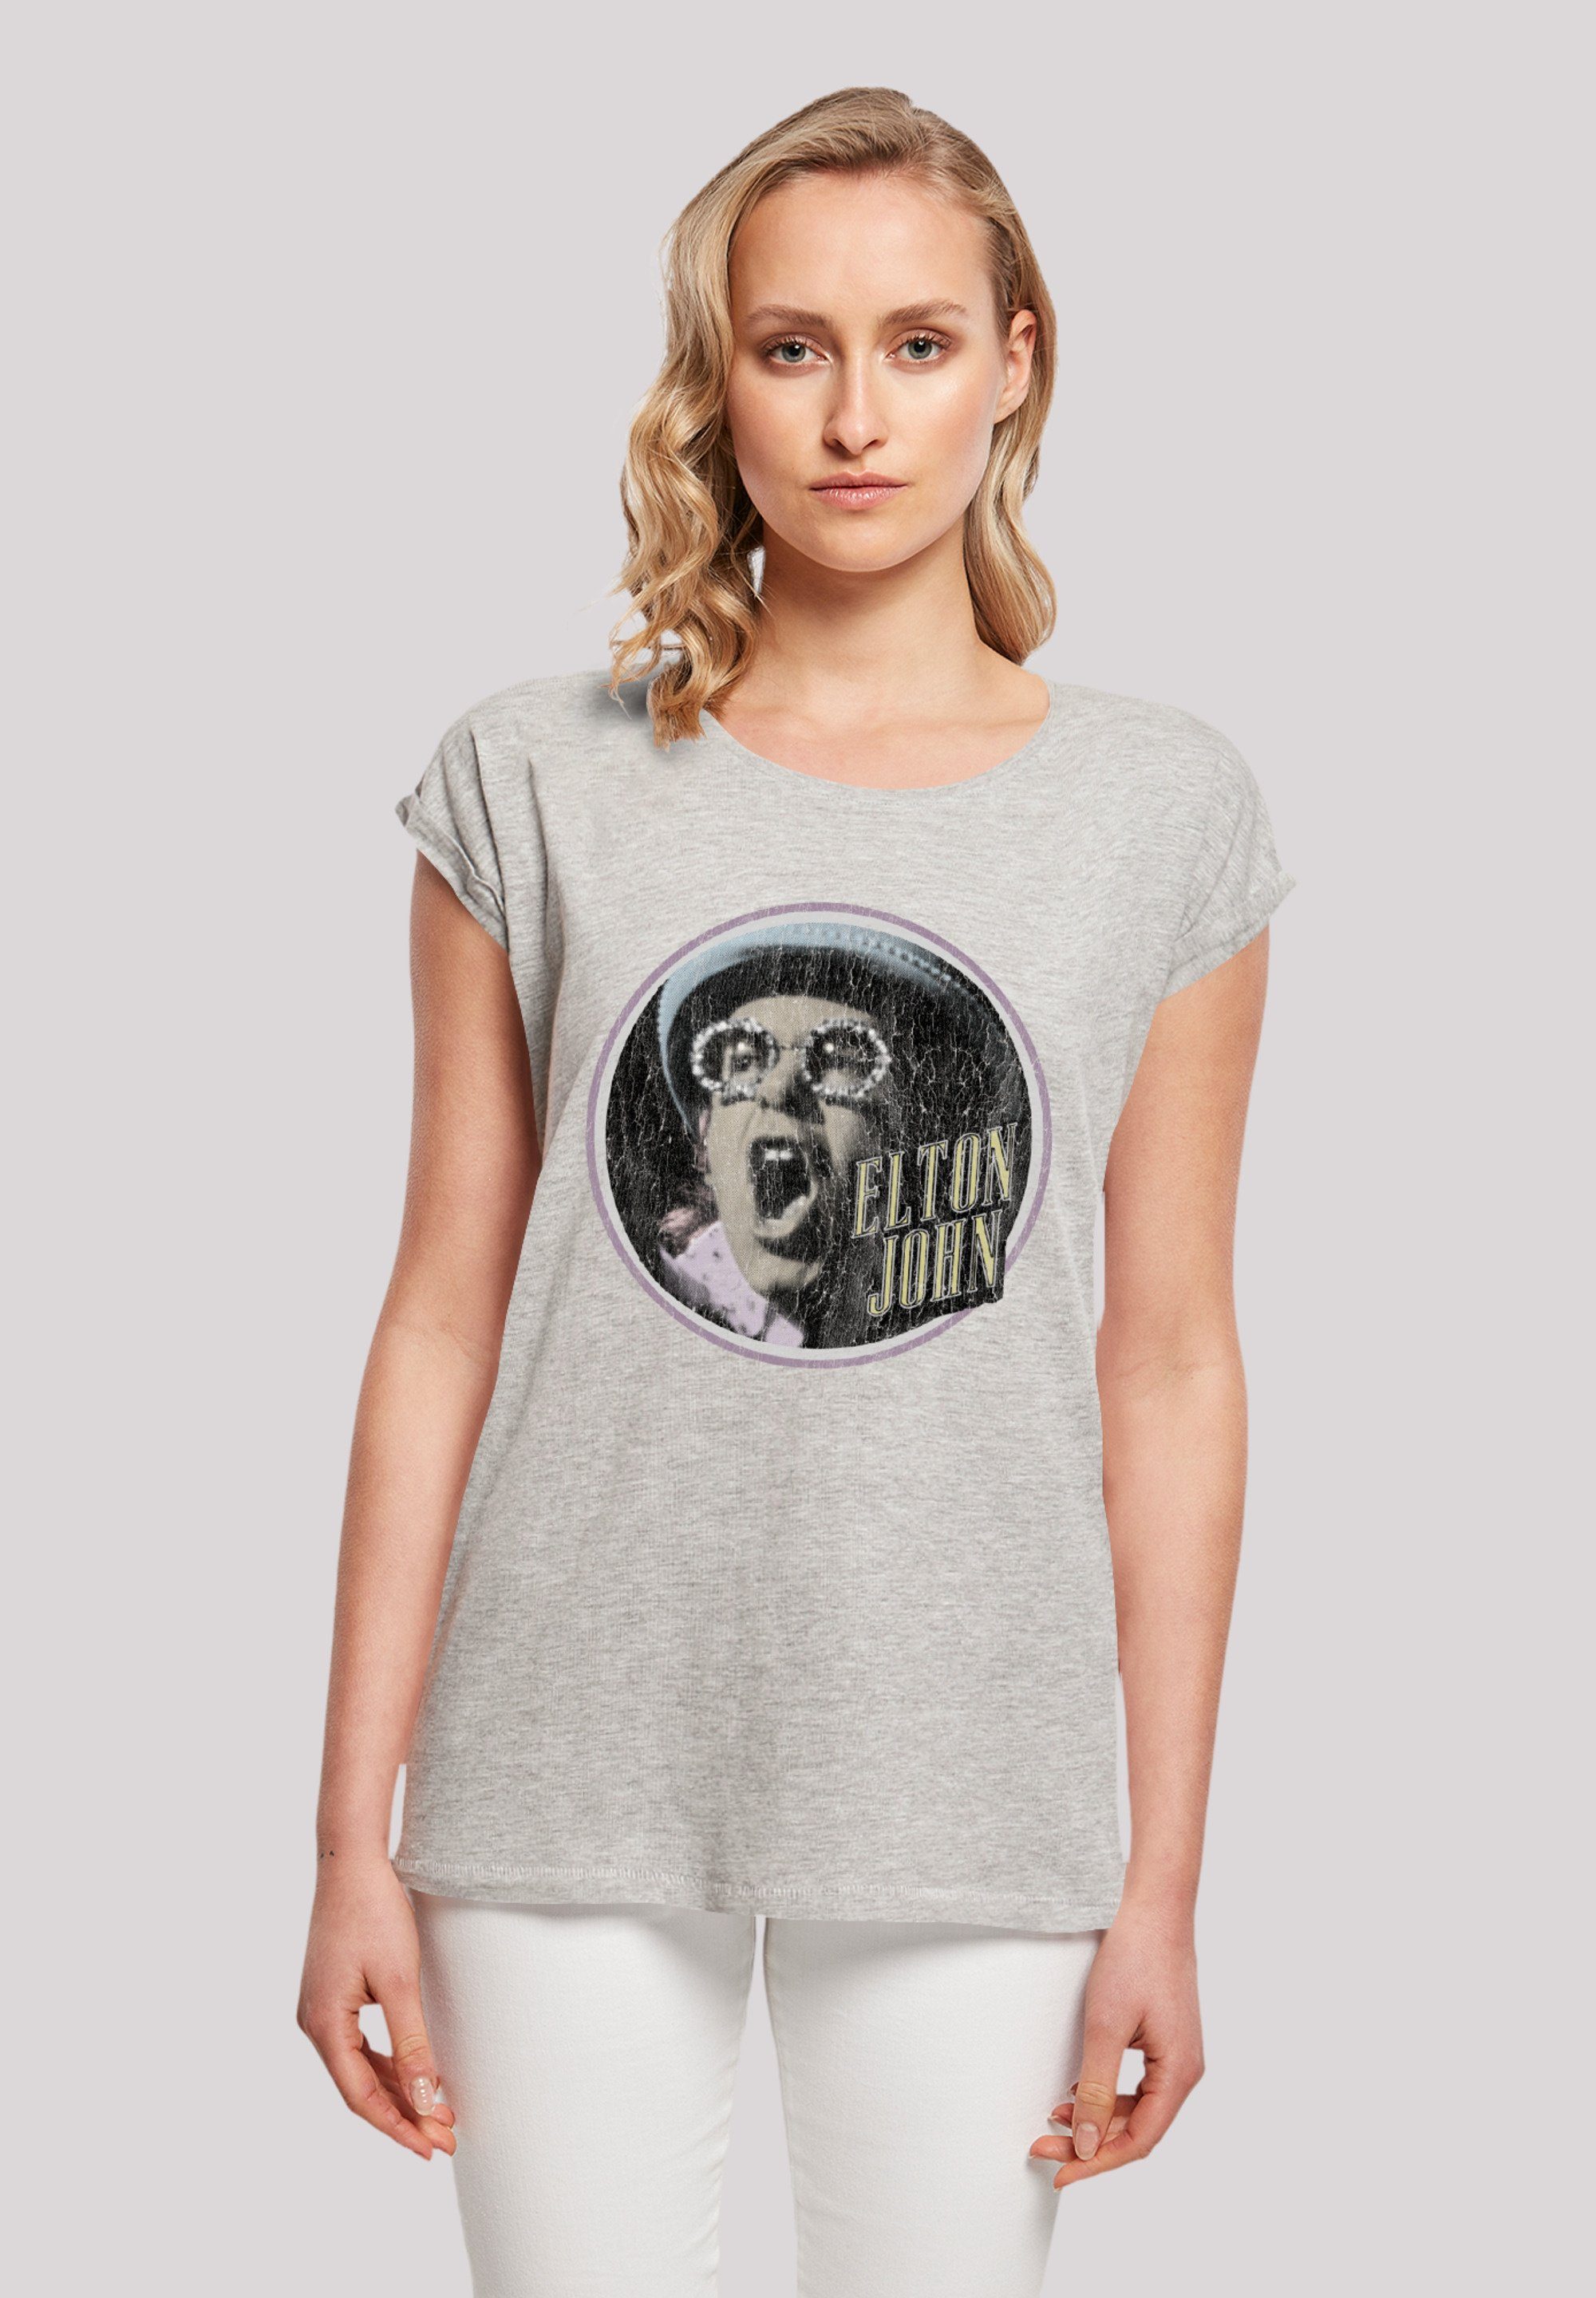 Premium Vintage Qualität John grey heather Circle T-Shirt Elton F4NT4STIC